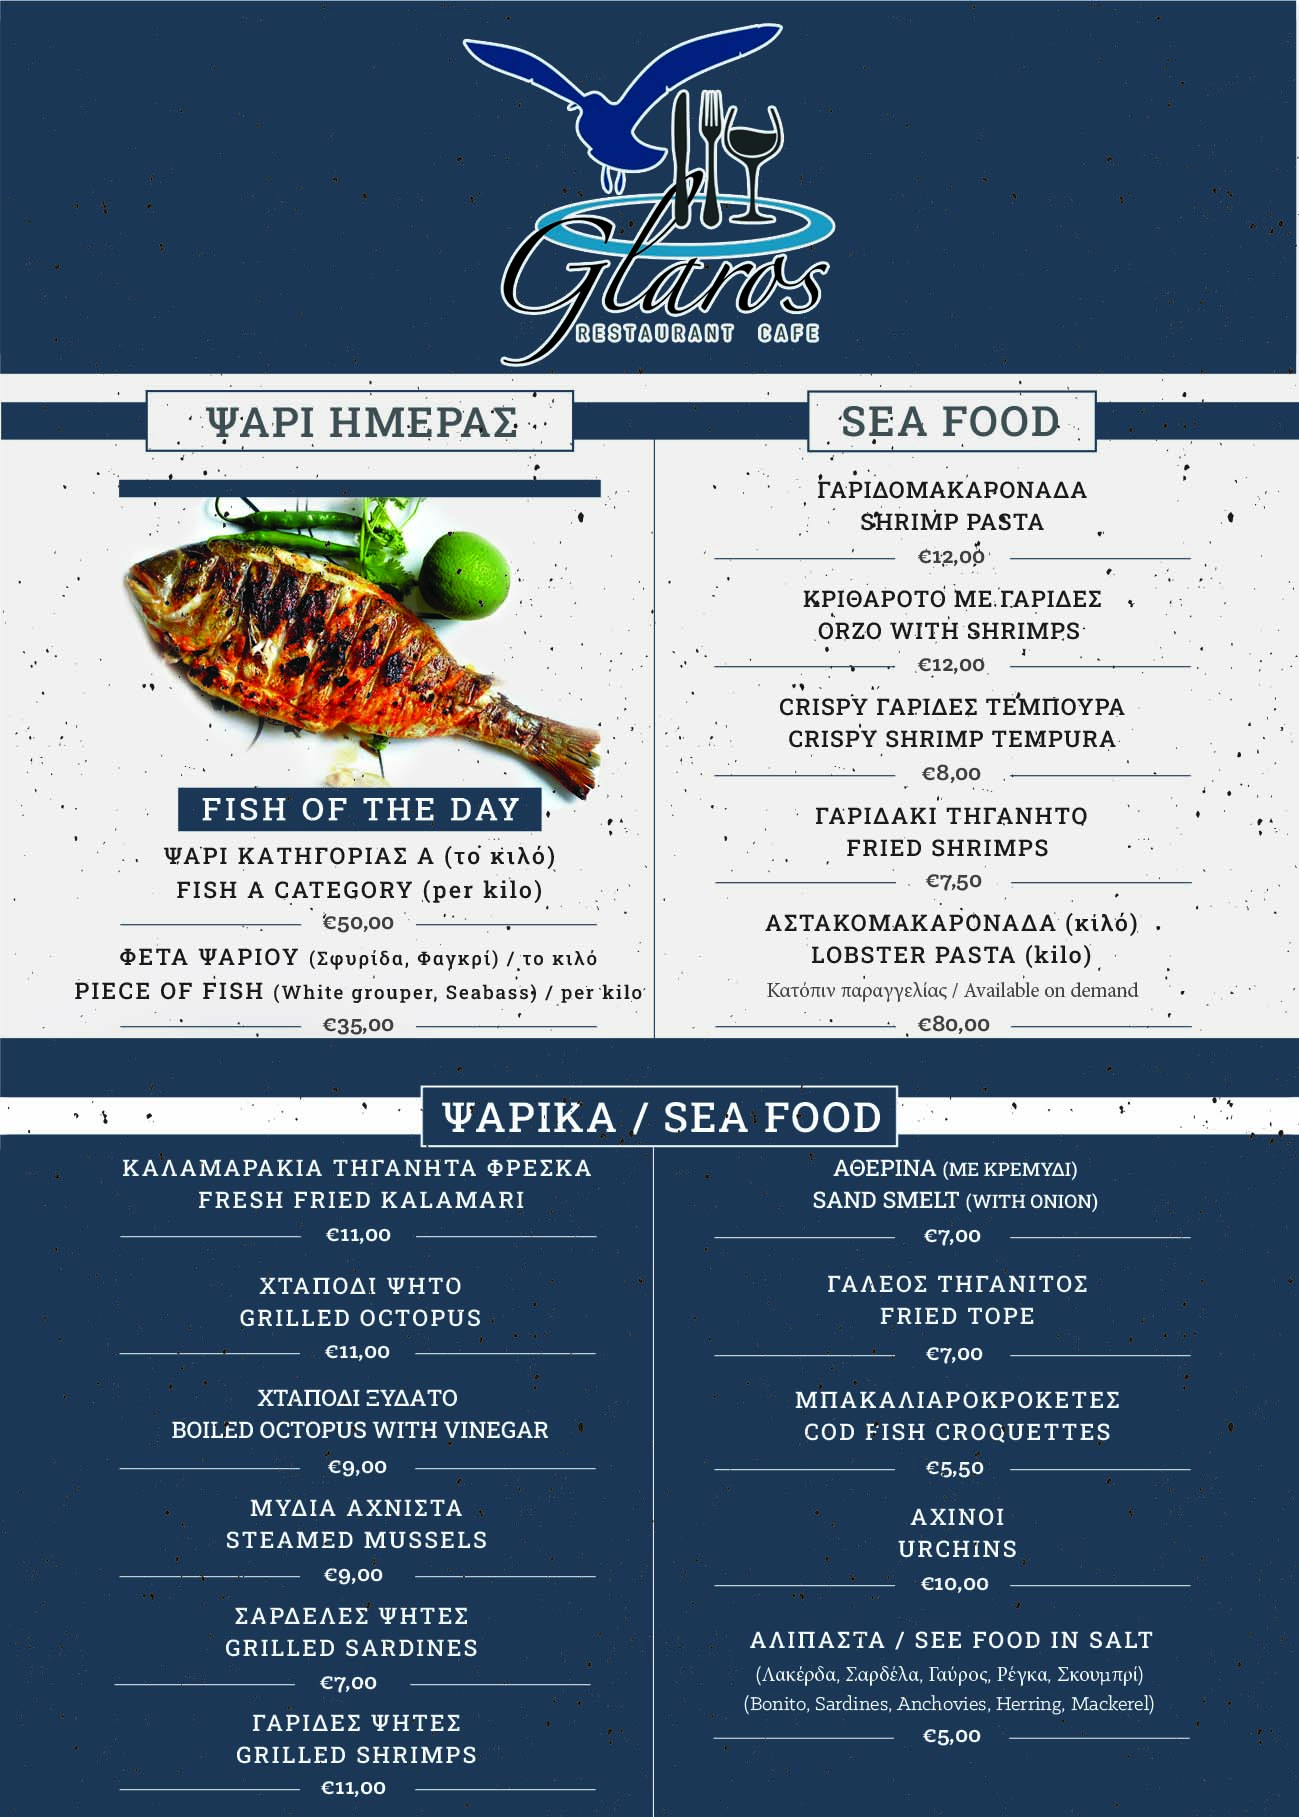 glaros-restaurant-menu-seafood